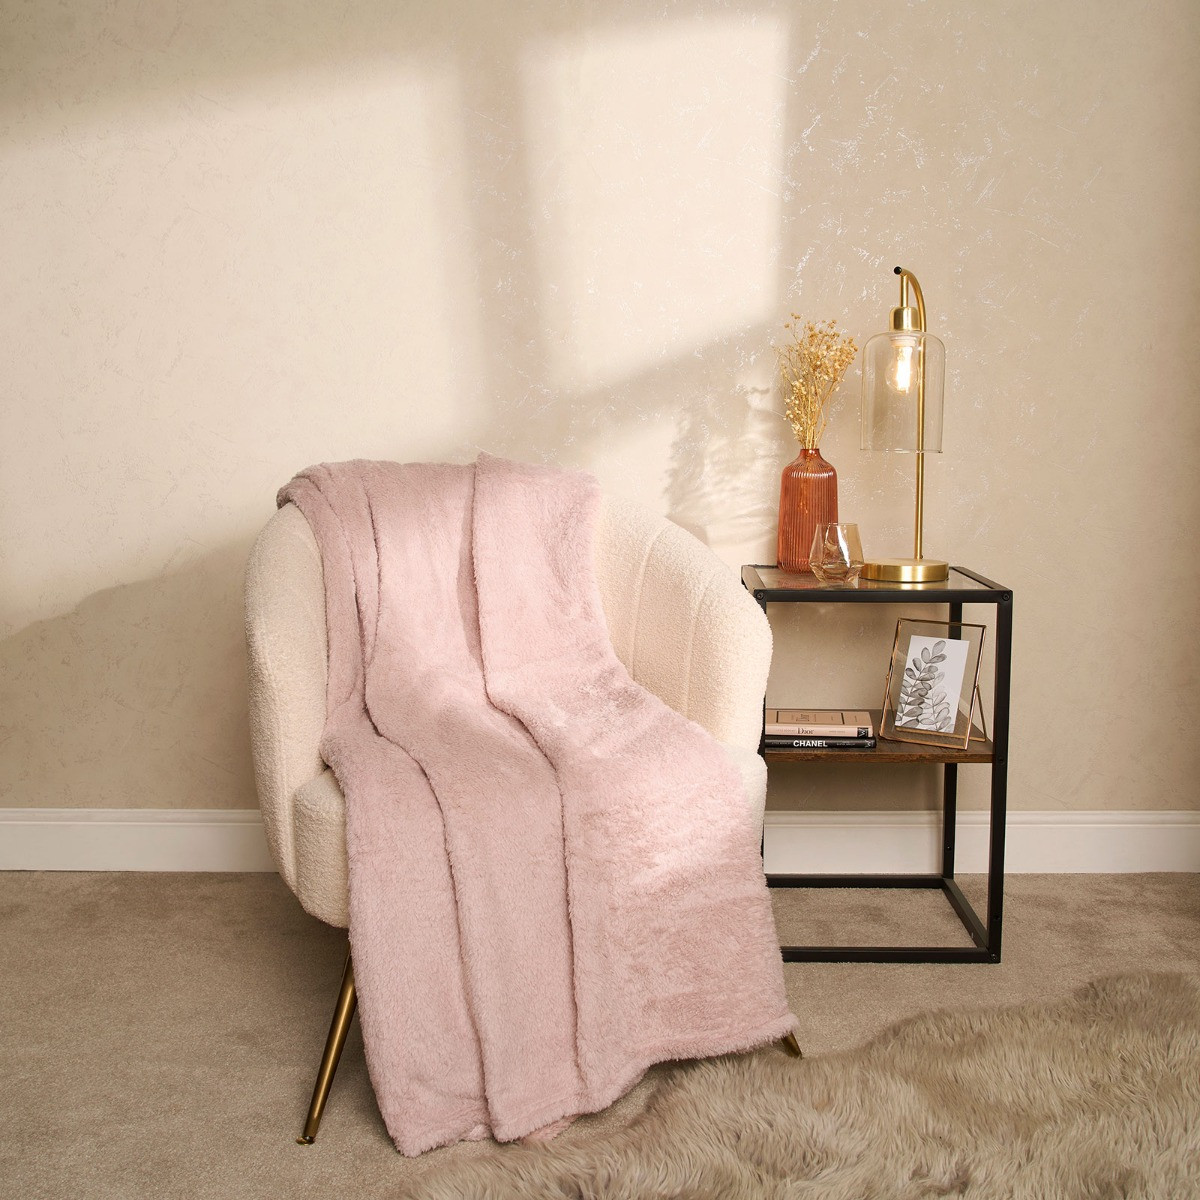 Brentfords Teddy Fleece Blanket Throw, Blush Pink - 125 x 150cm>